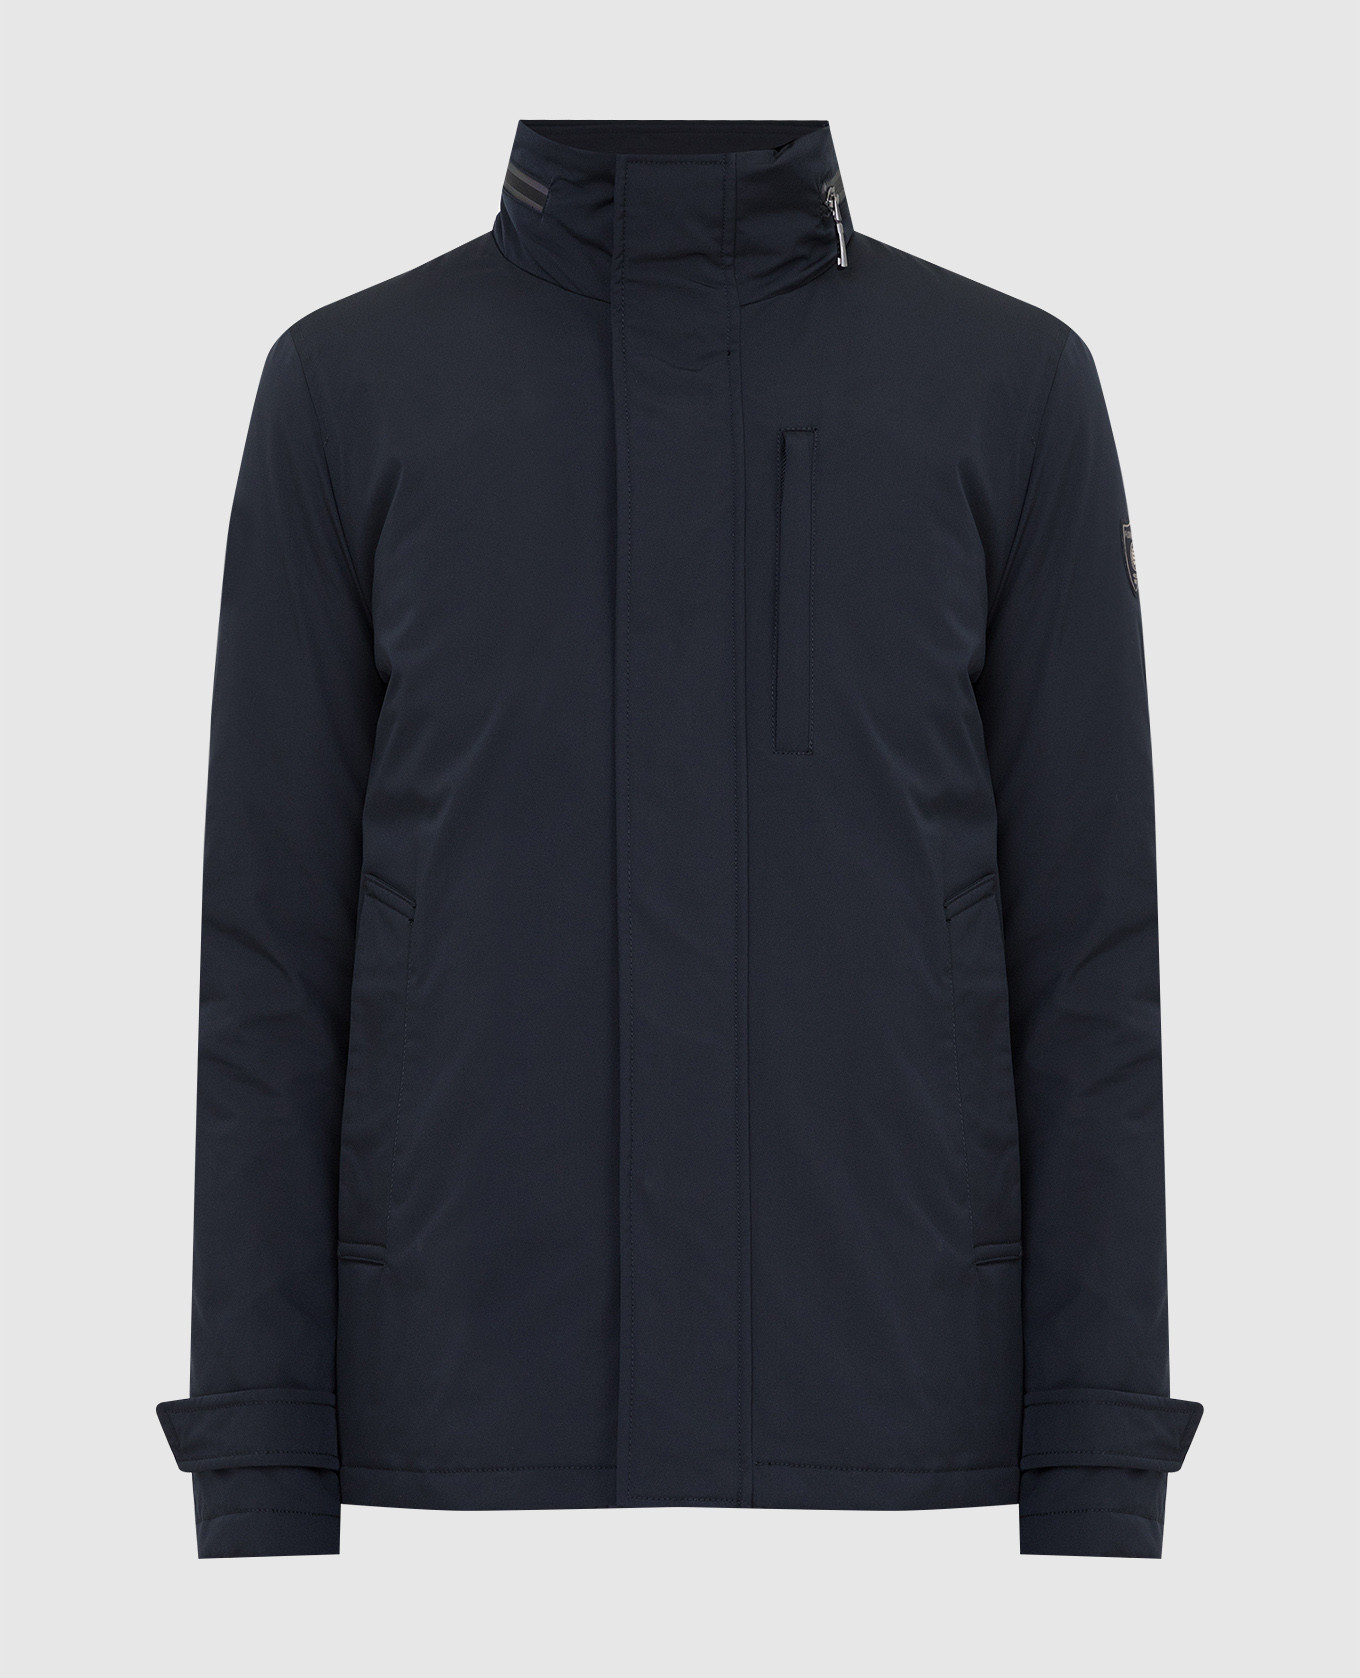 Florentino - Navy blue logo jacket 221371120401 buy at Symbol